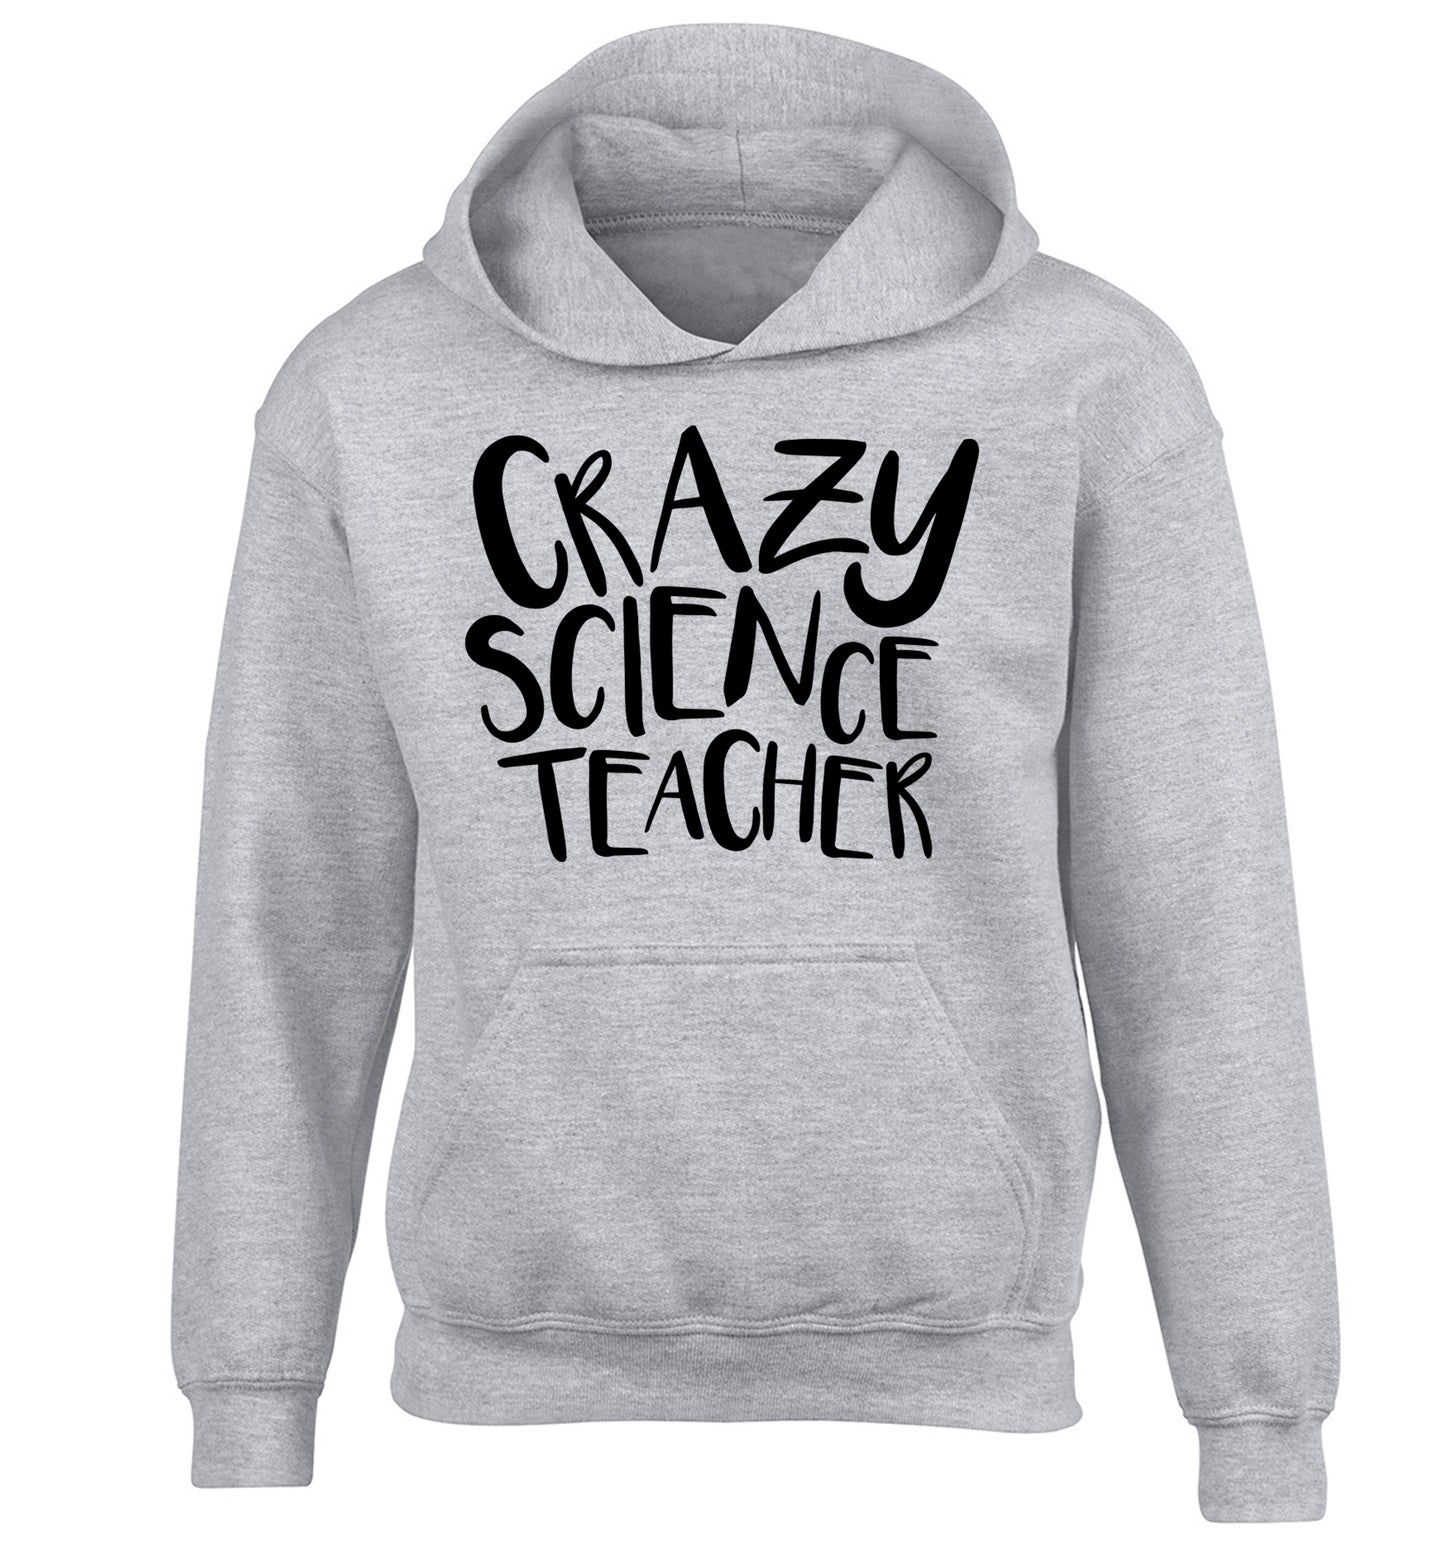 Crazy science teacher children's grey hoodie 12-13 Years